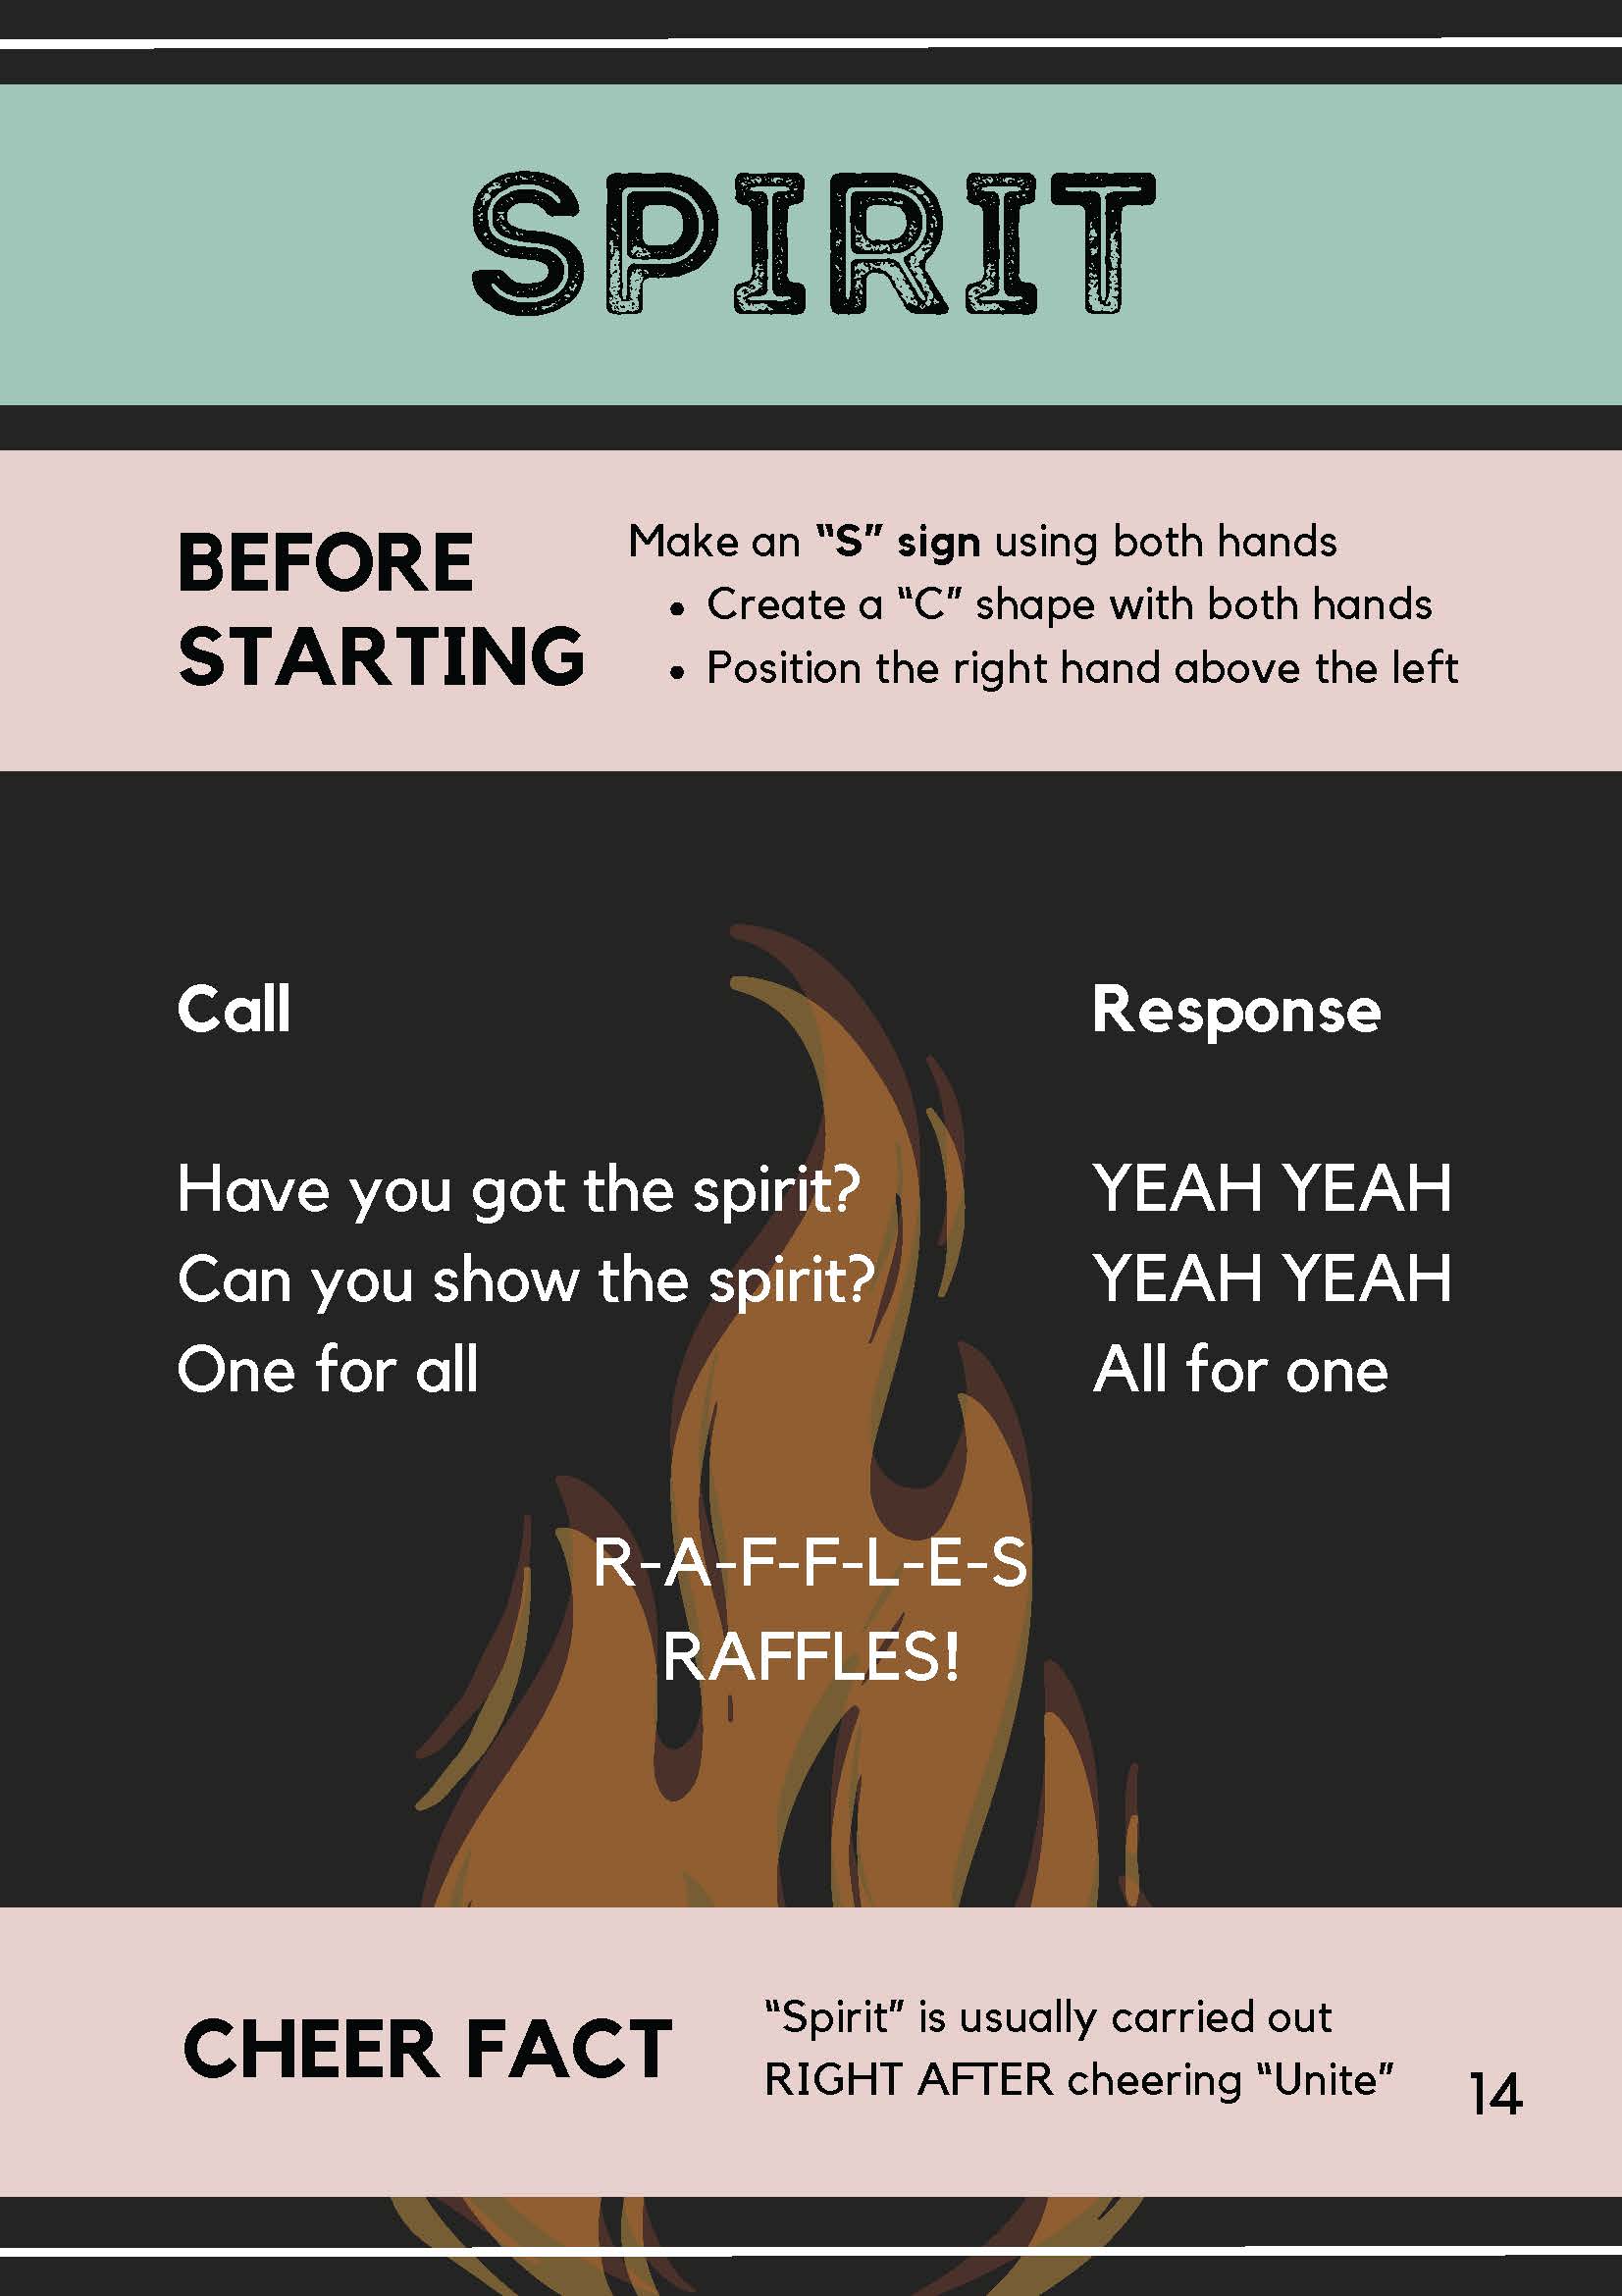 Rafflesian Spirit